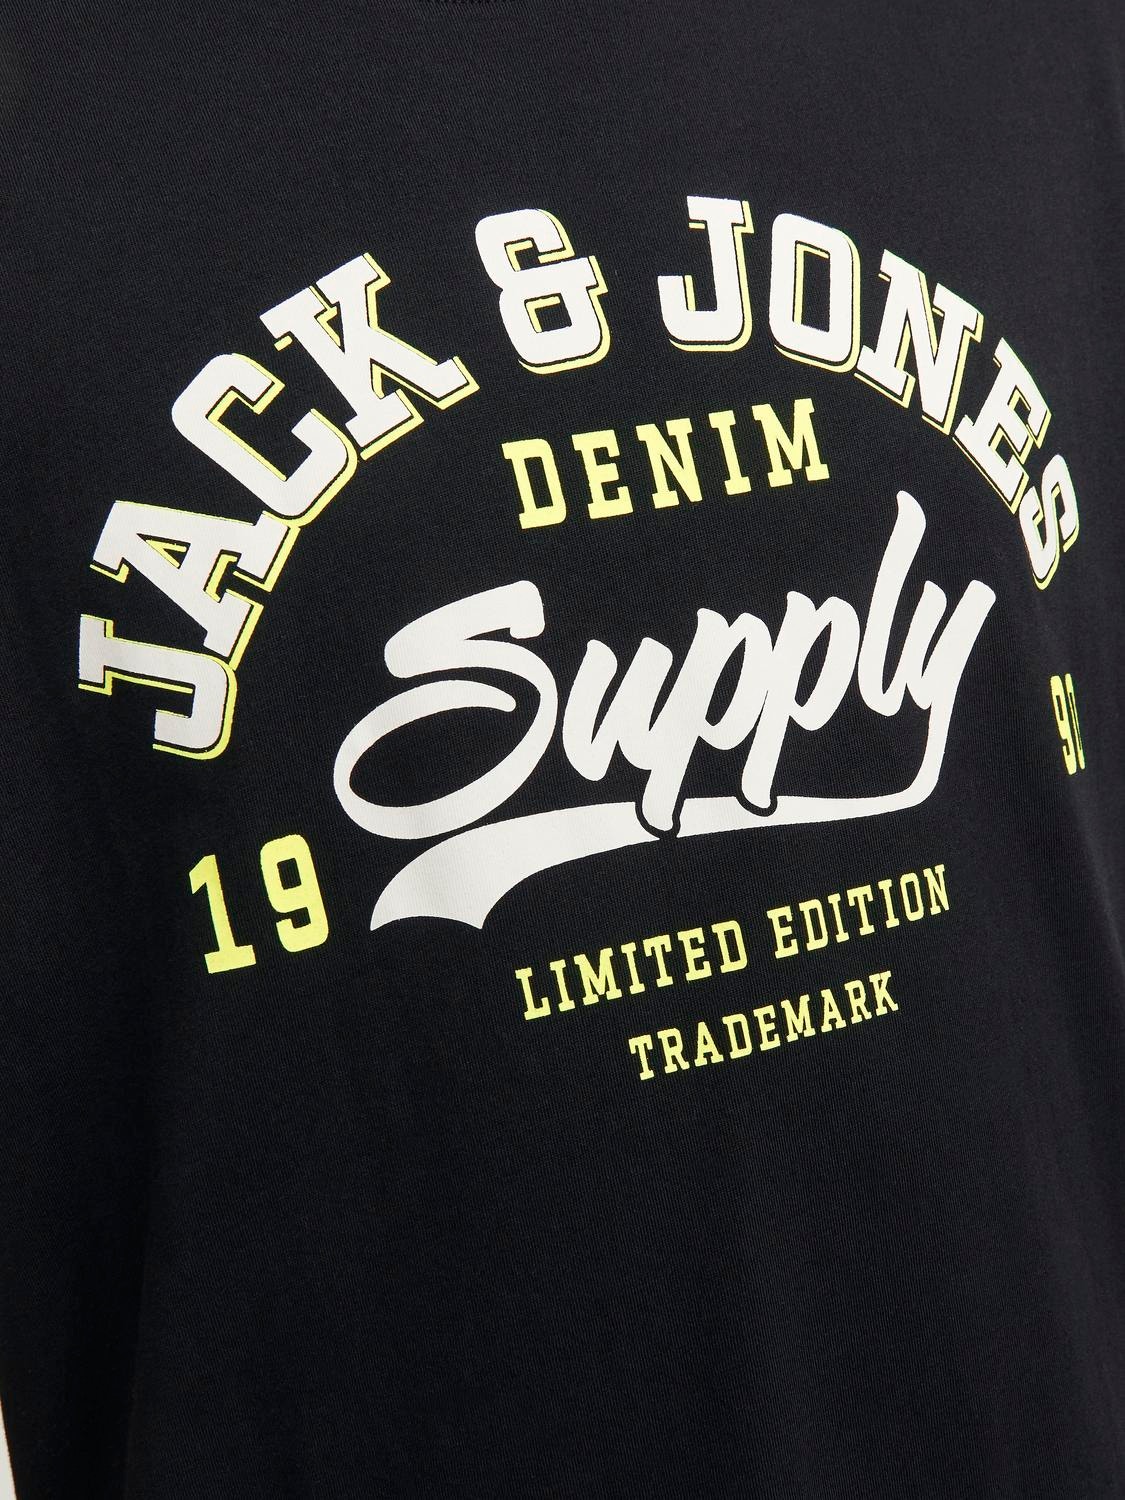 Jack & Jones Logo Ronde hals T-shirt -Black - 12246690